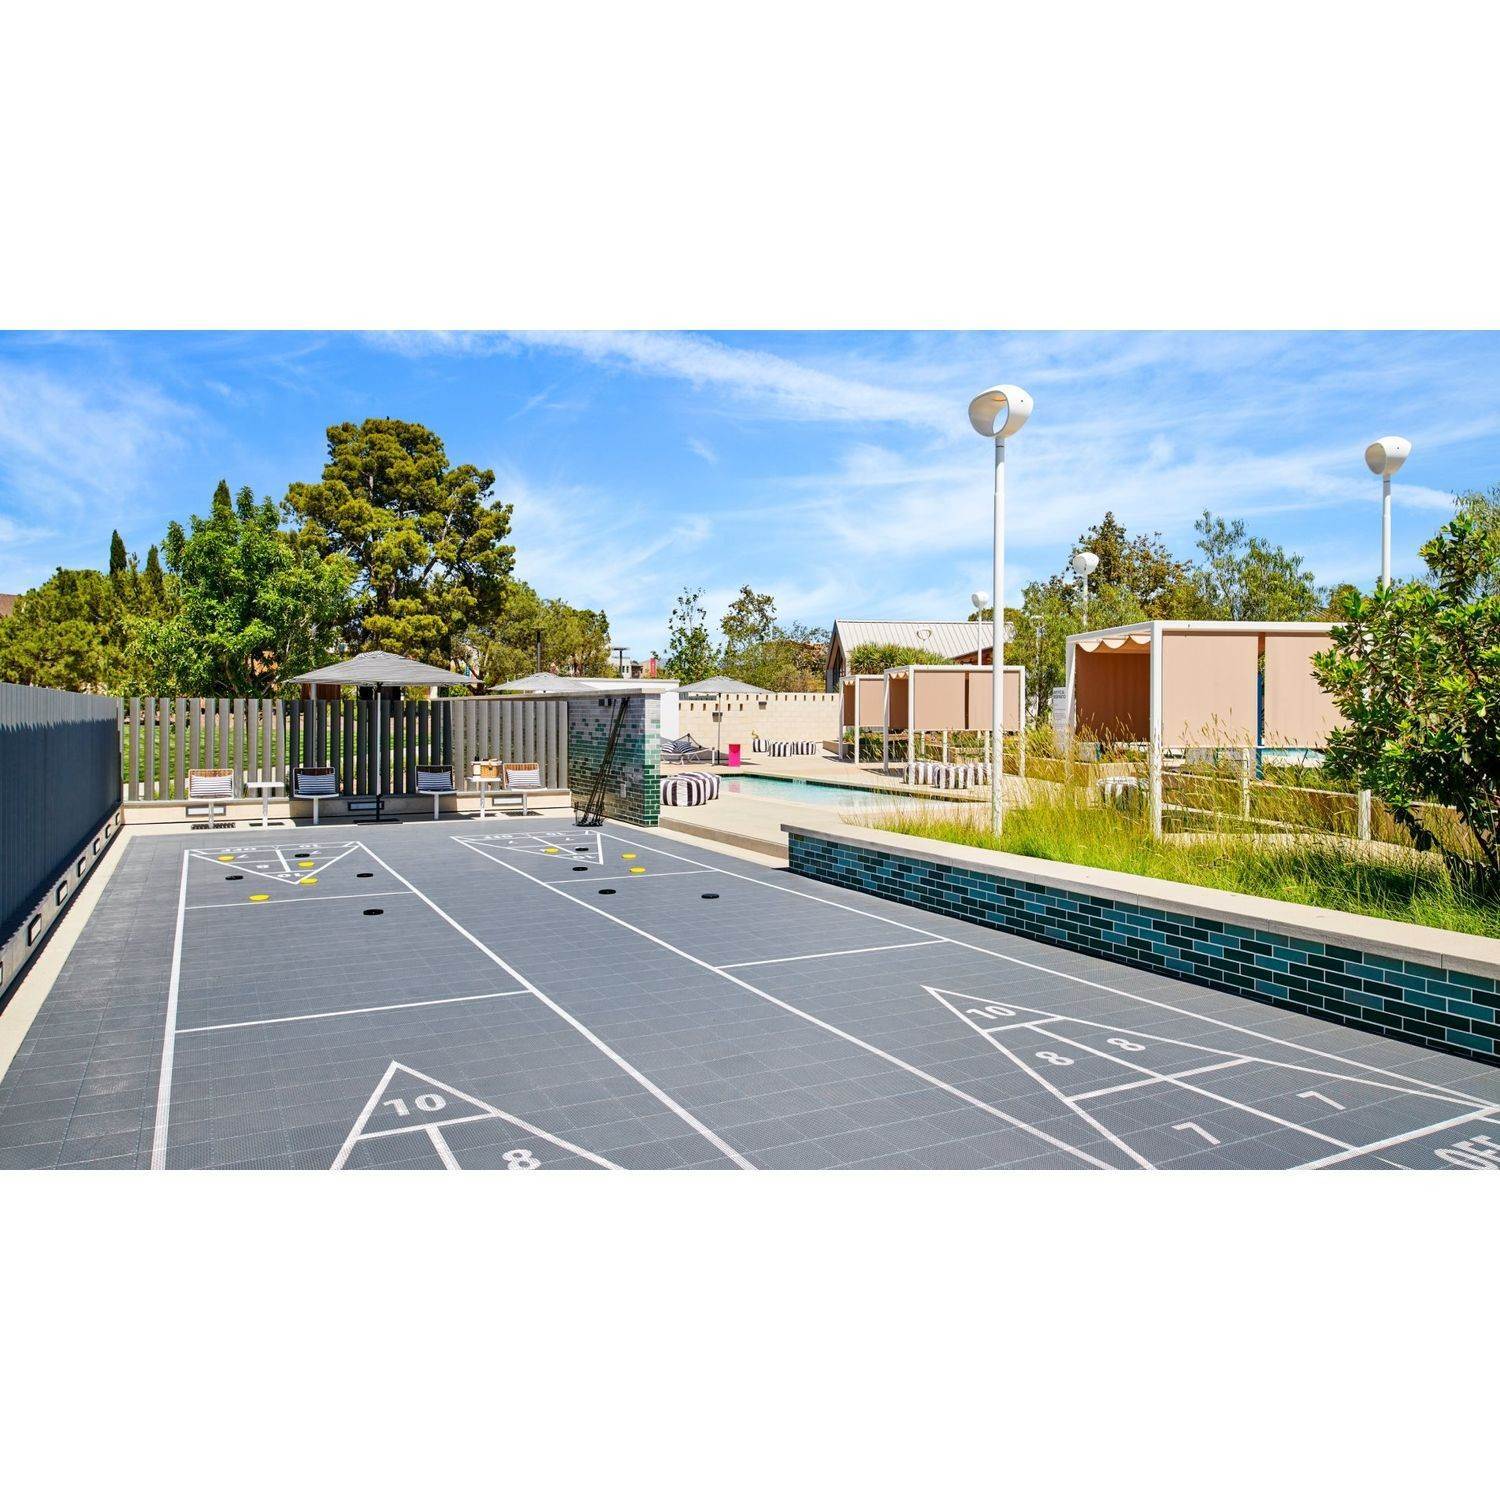 25. Great Park Neighborhoods - Camellia at Solis Park building at 207 Biome, Irvine, Ca, Irvine, CA 92618